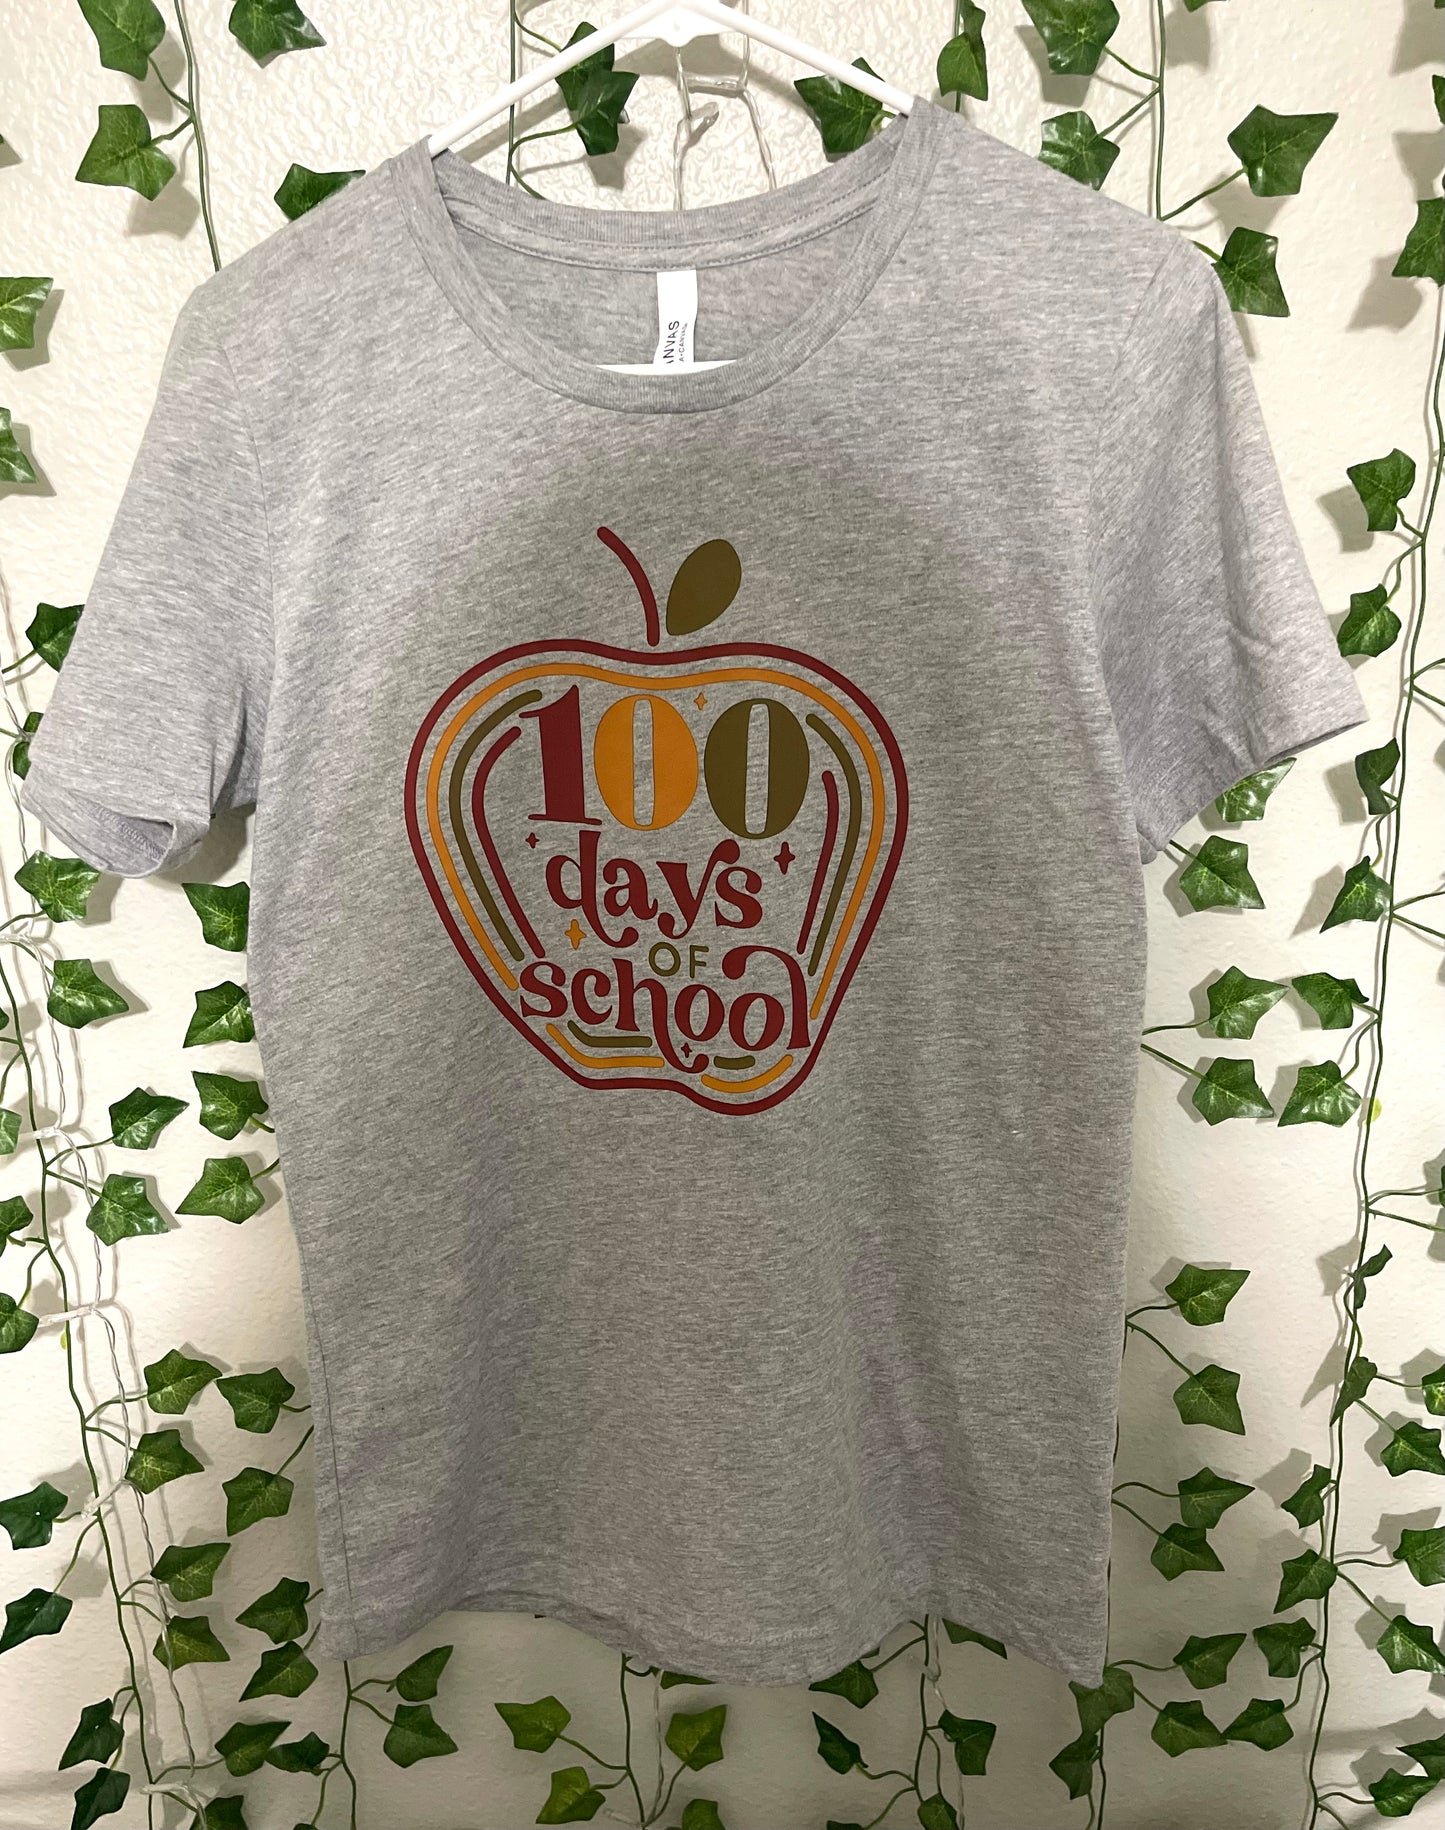 100 days of school t-shirt